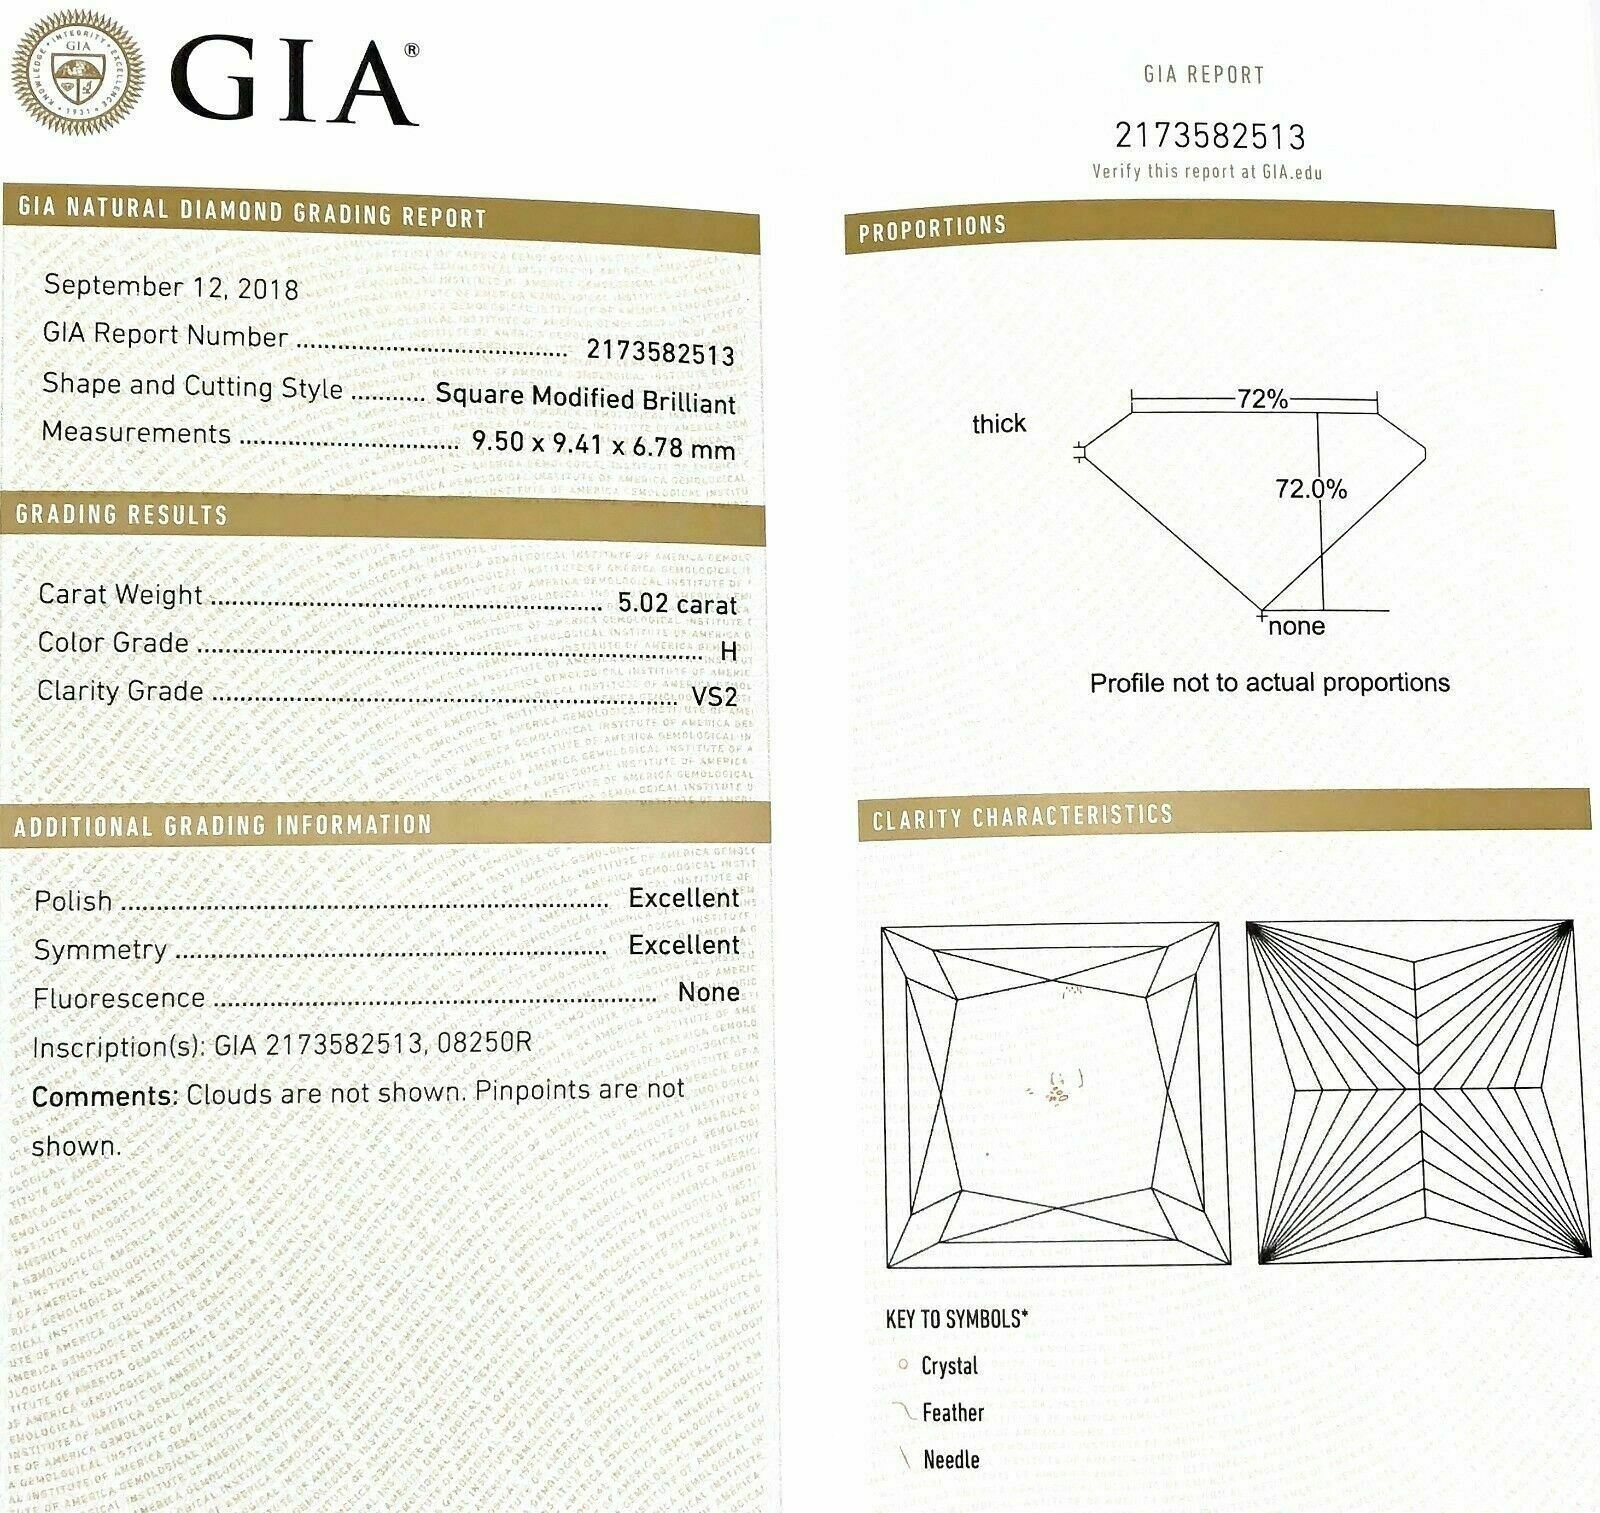 Loose GIA Diamond - Large 5.02 Carats GIA Princess Cut H VS2 Diamond Ex Ex Cut